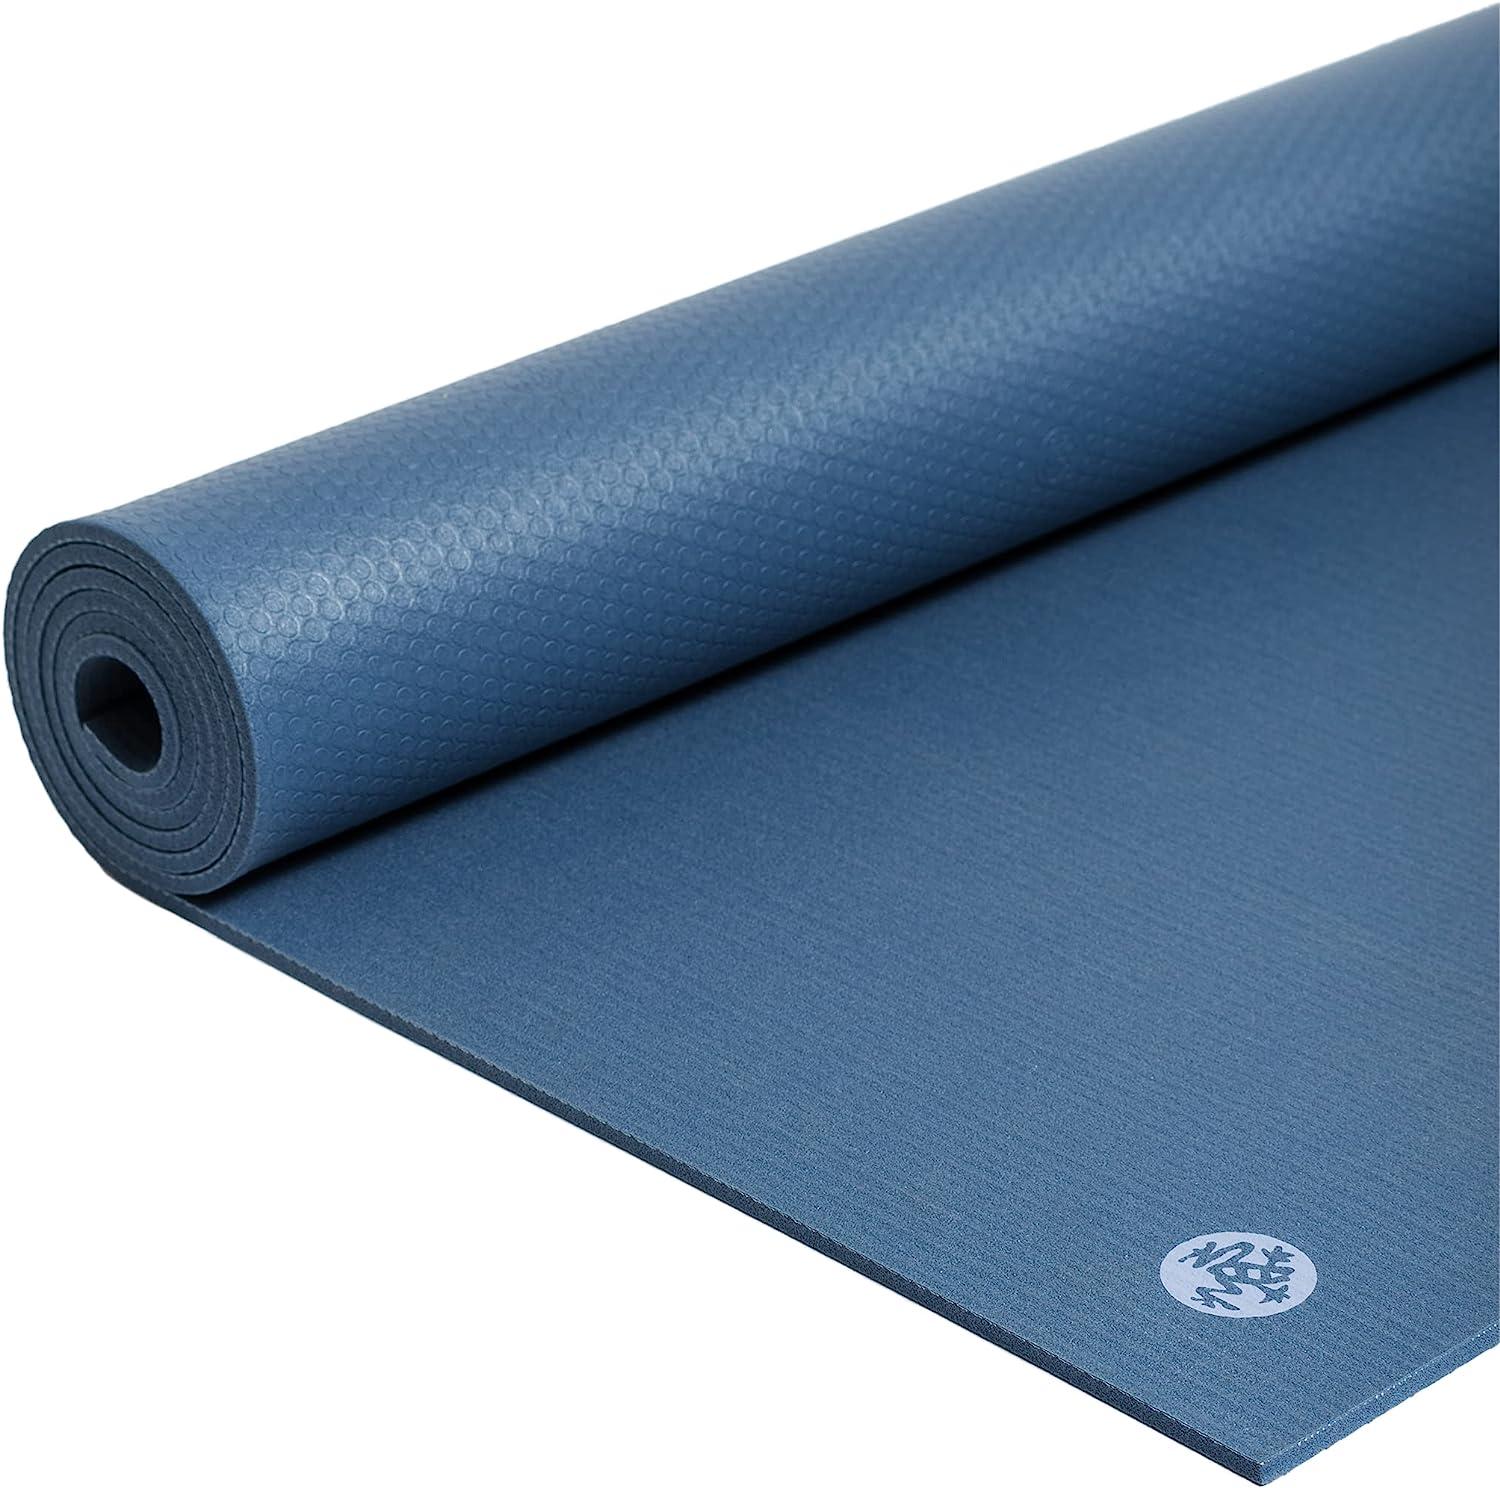 Manduka Pro Standard 71 Inch Yoga Mat